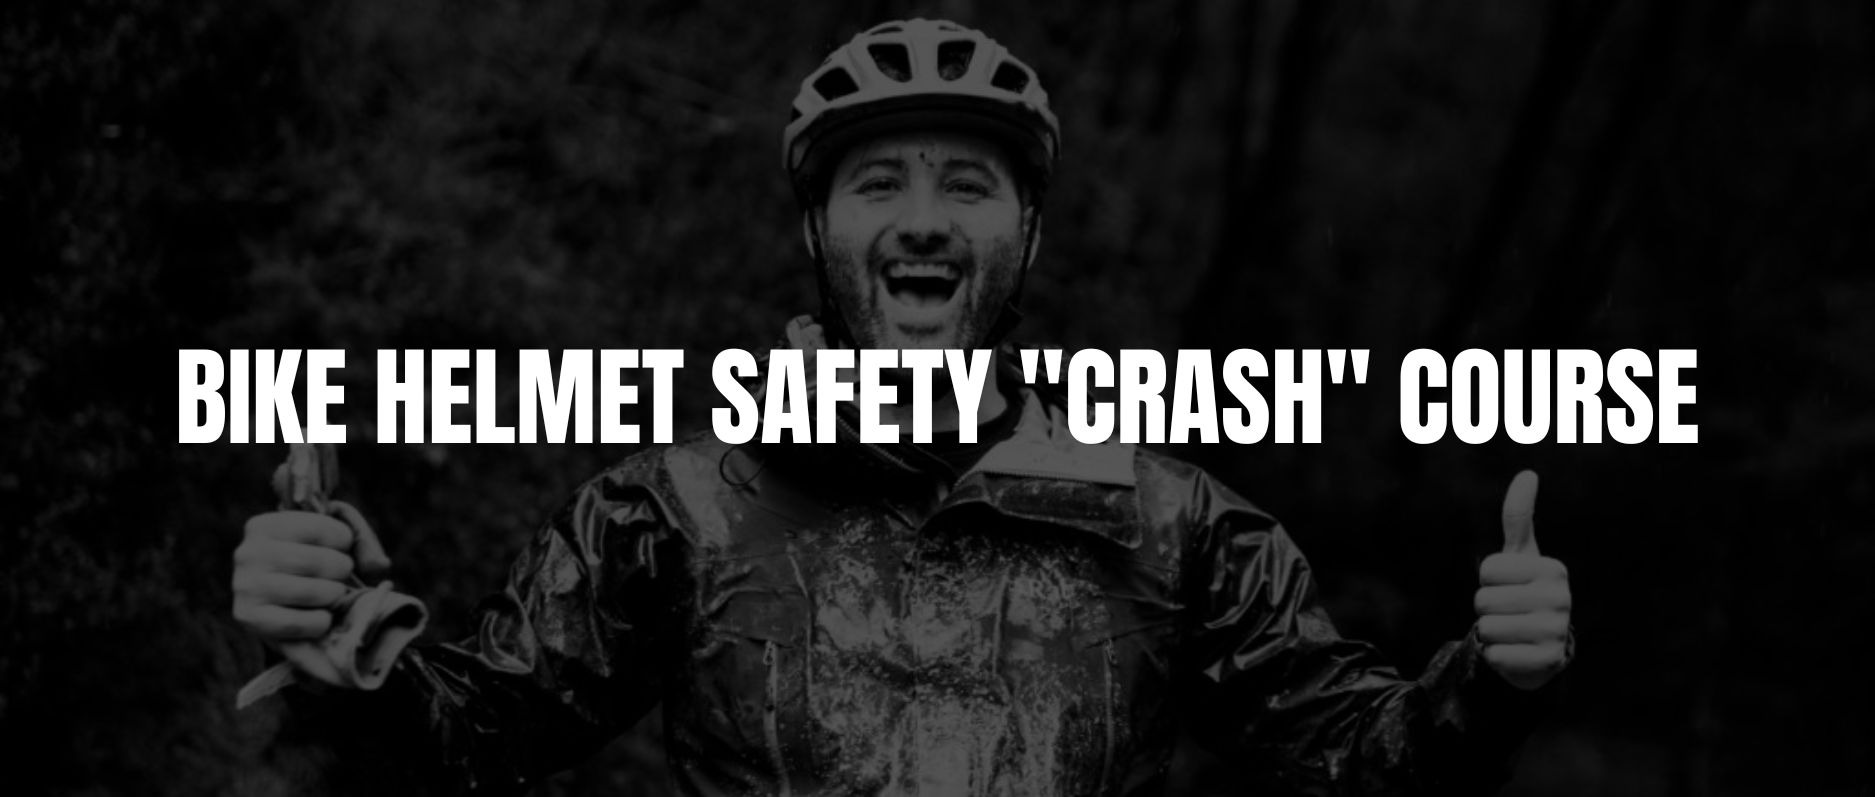 Bike Helmet Safety Crash Course. Image of a person wearing a bike helmet